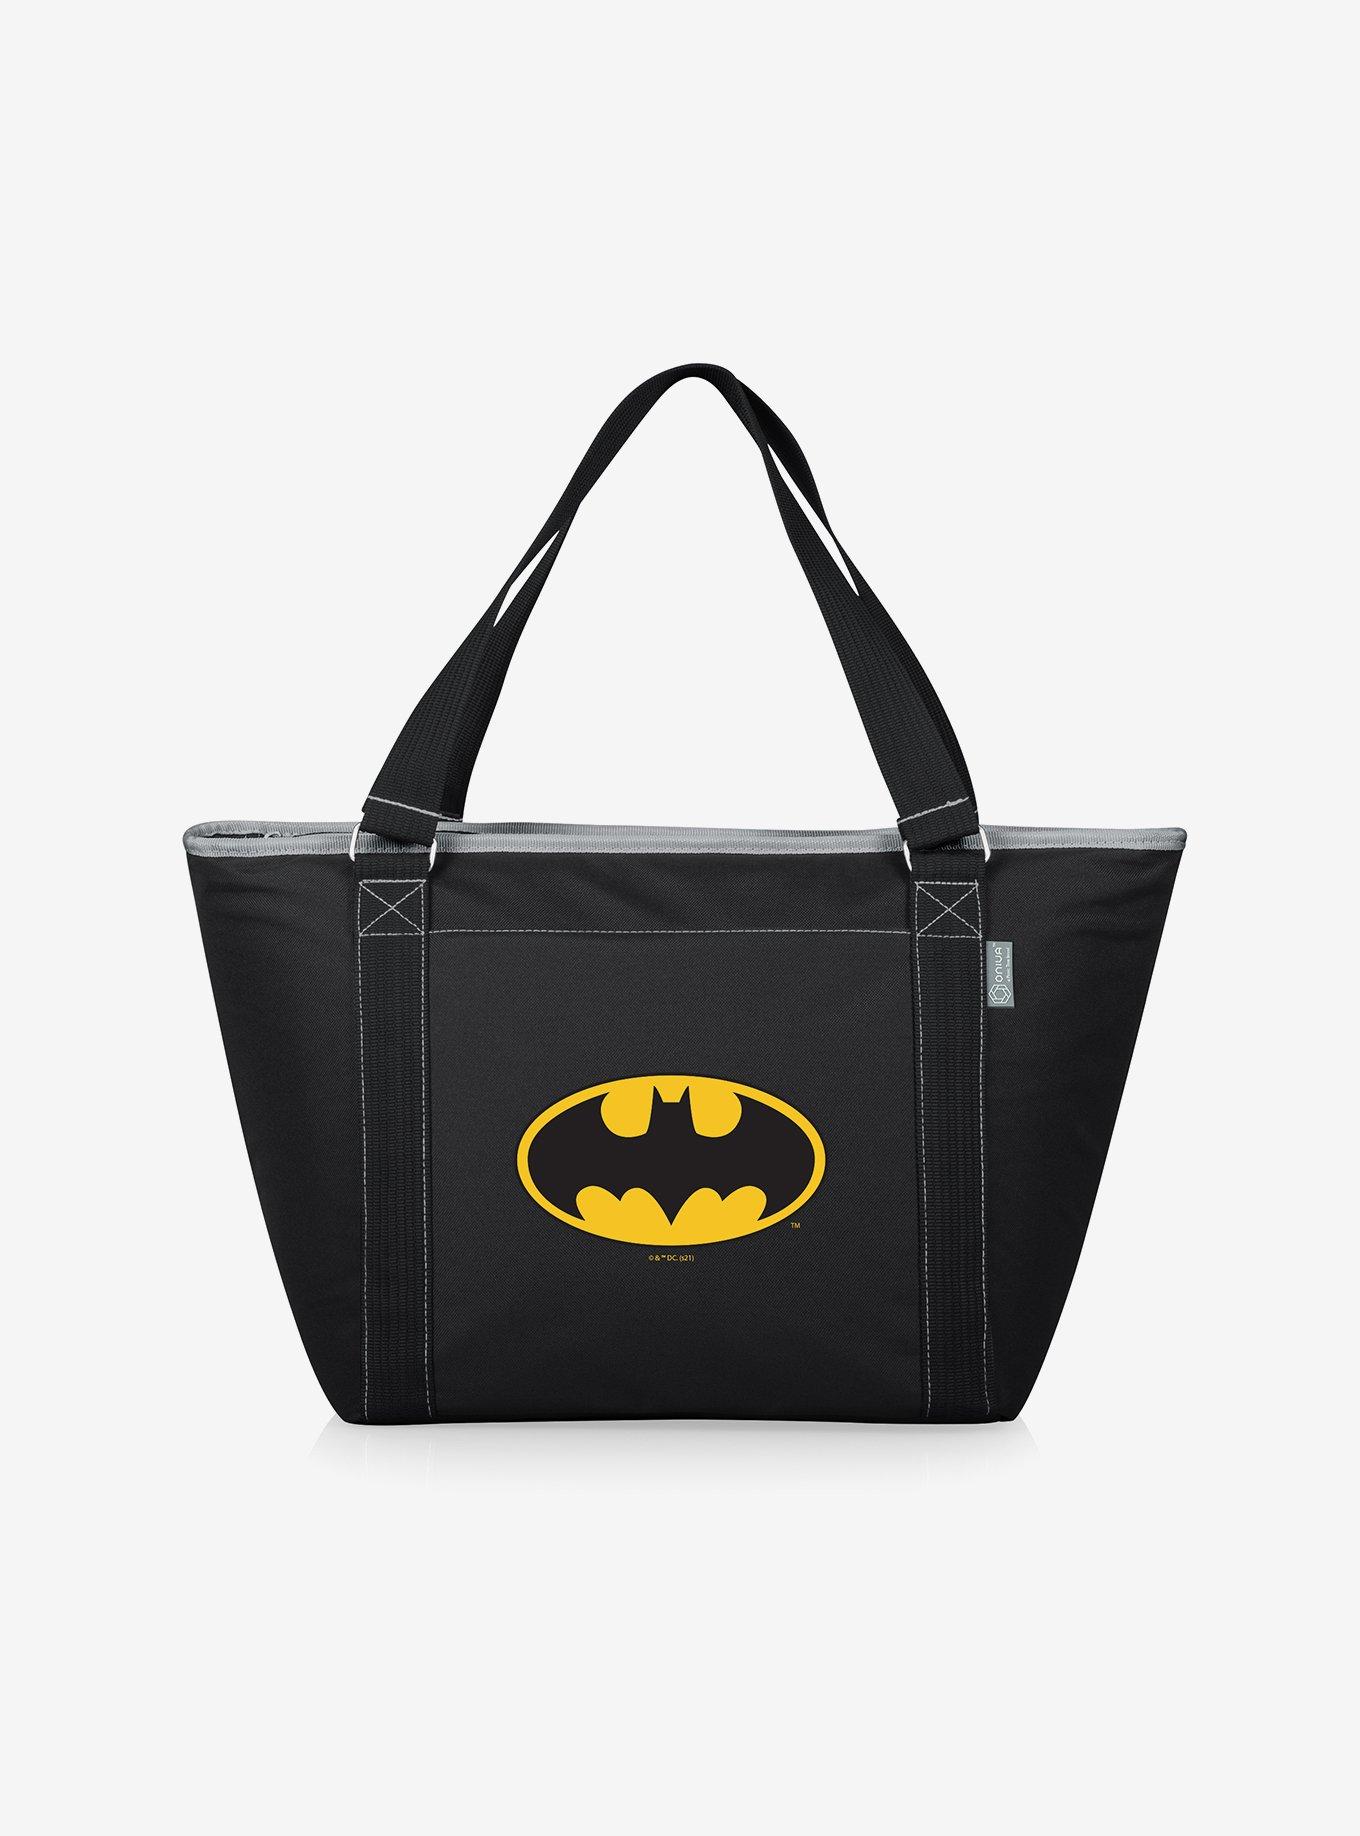 DC Comics Batman Topanga Cooler Tote Bag | Hot Topic